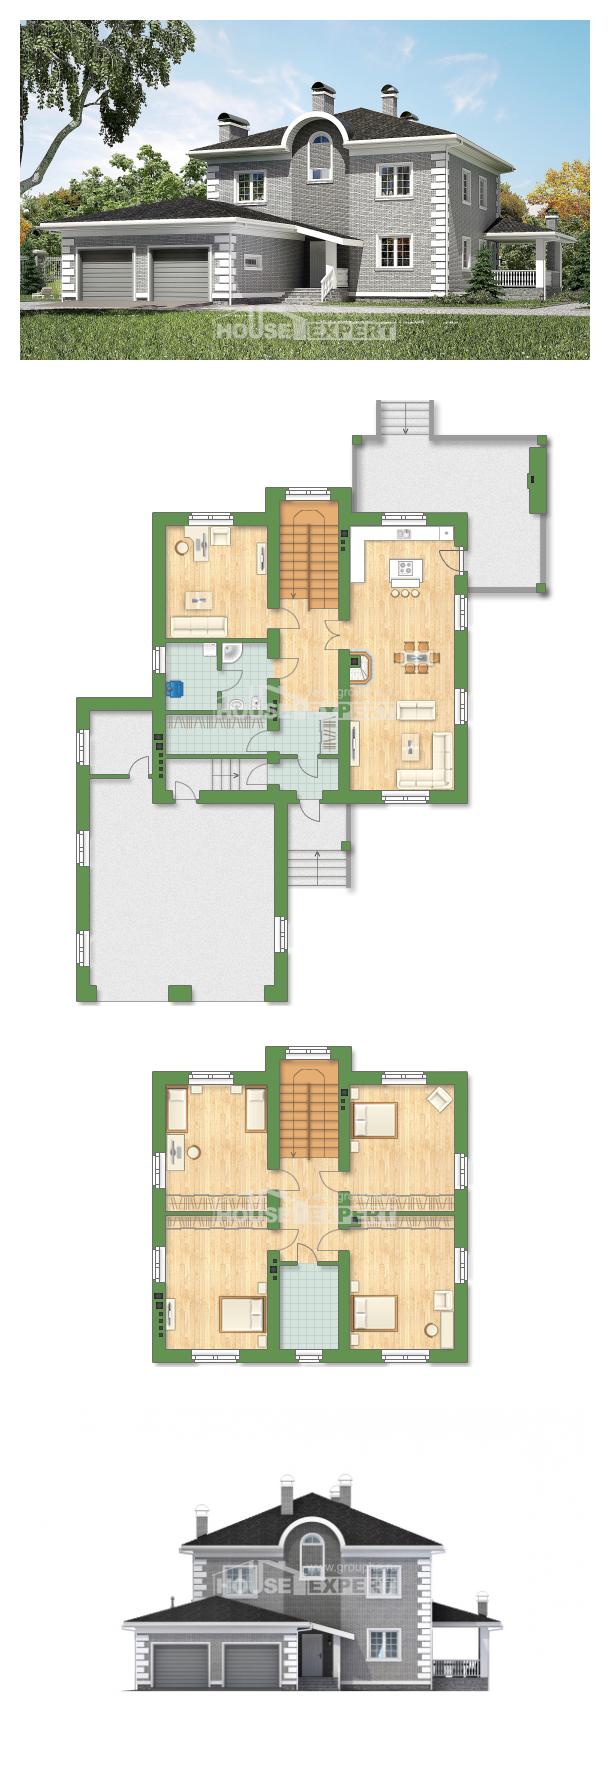 Проект дома 245-004-Л | House Expert